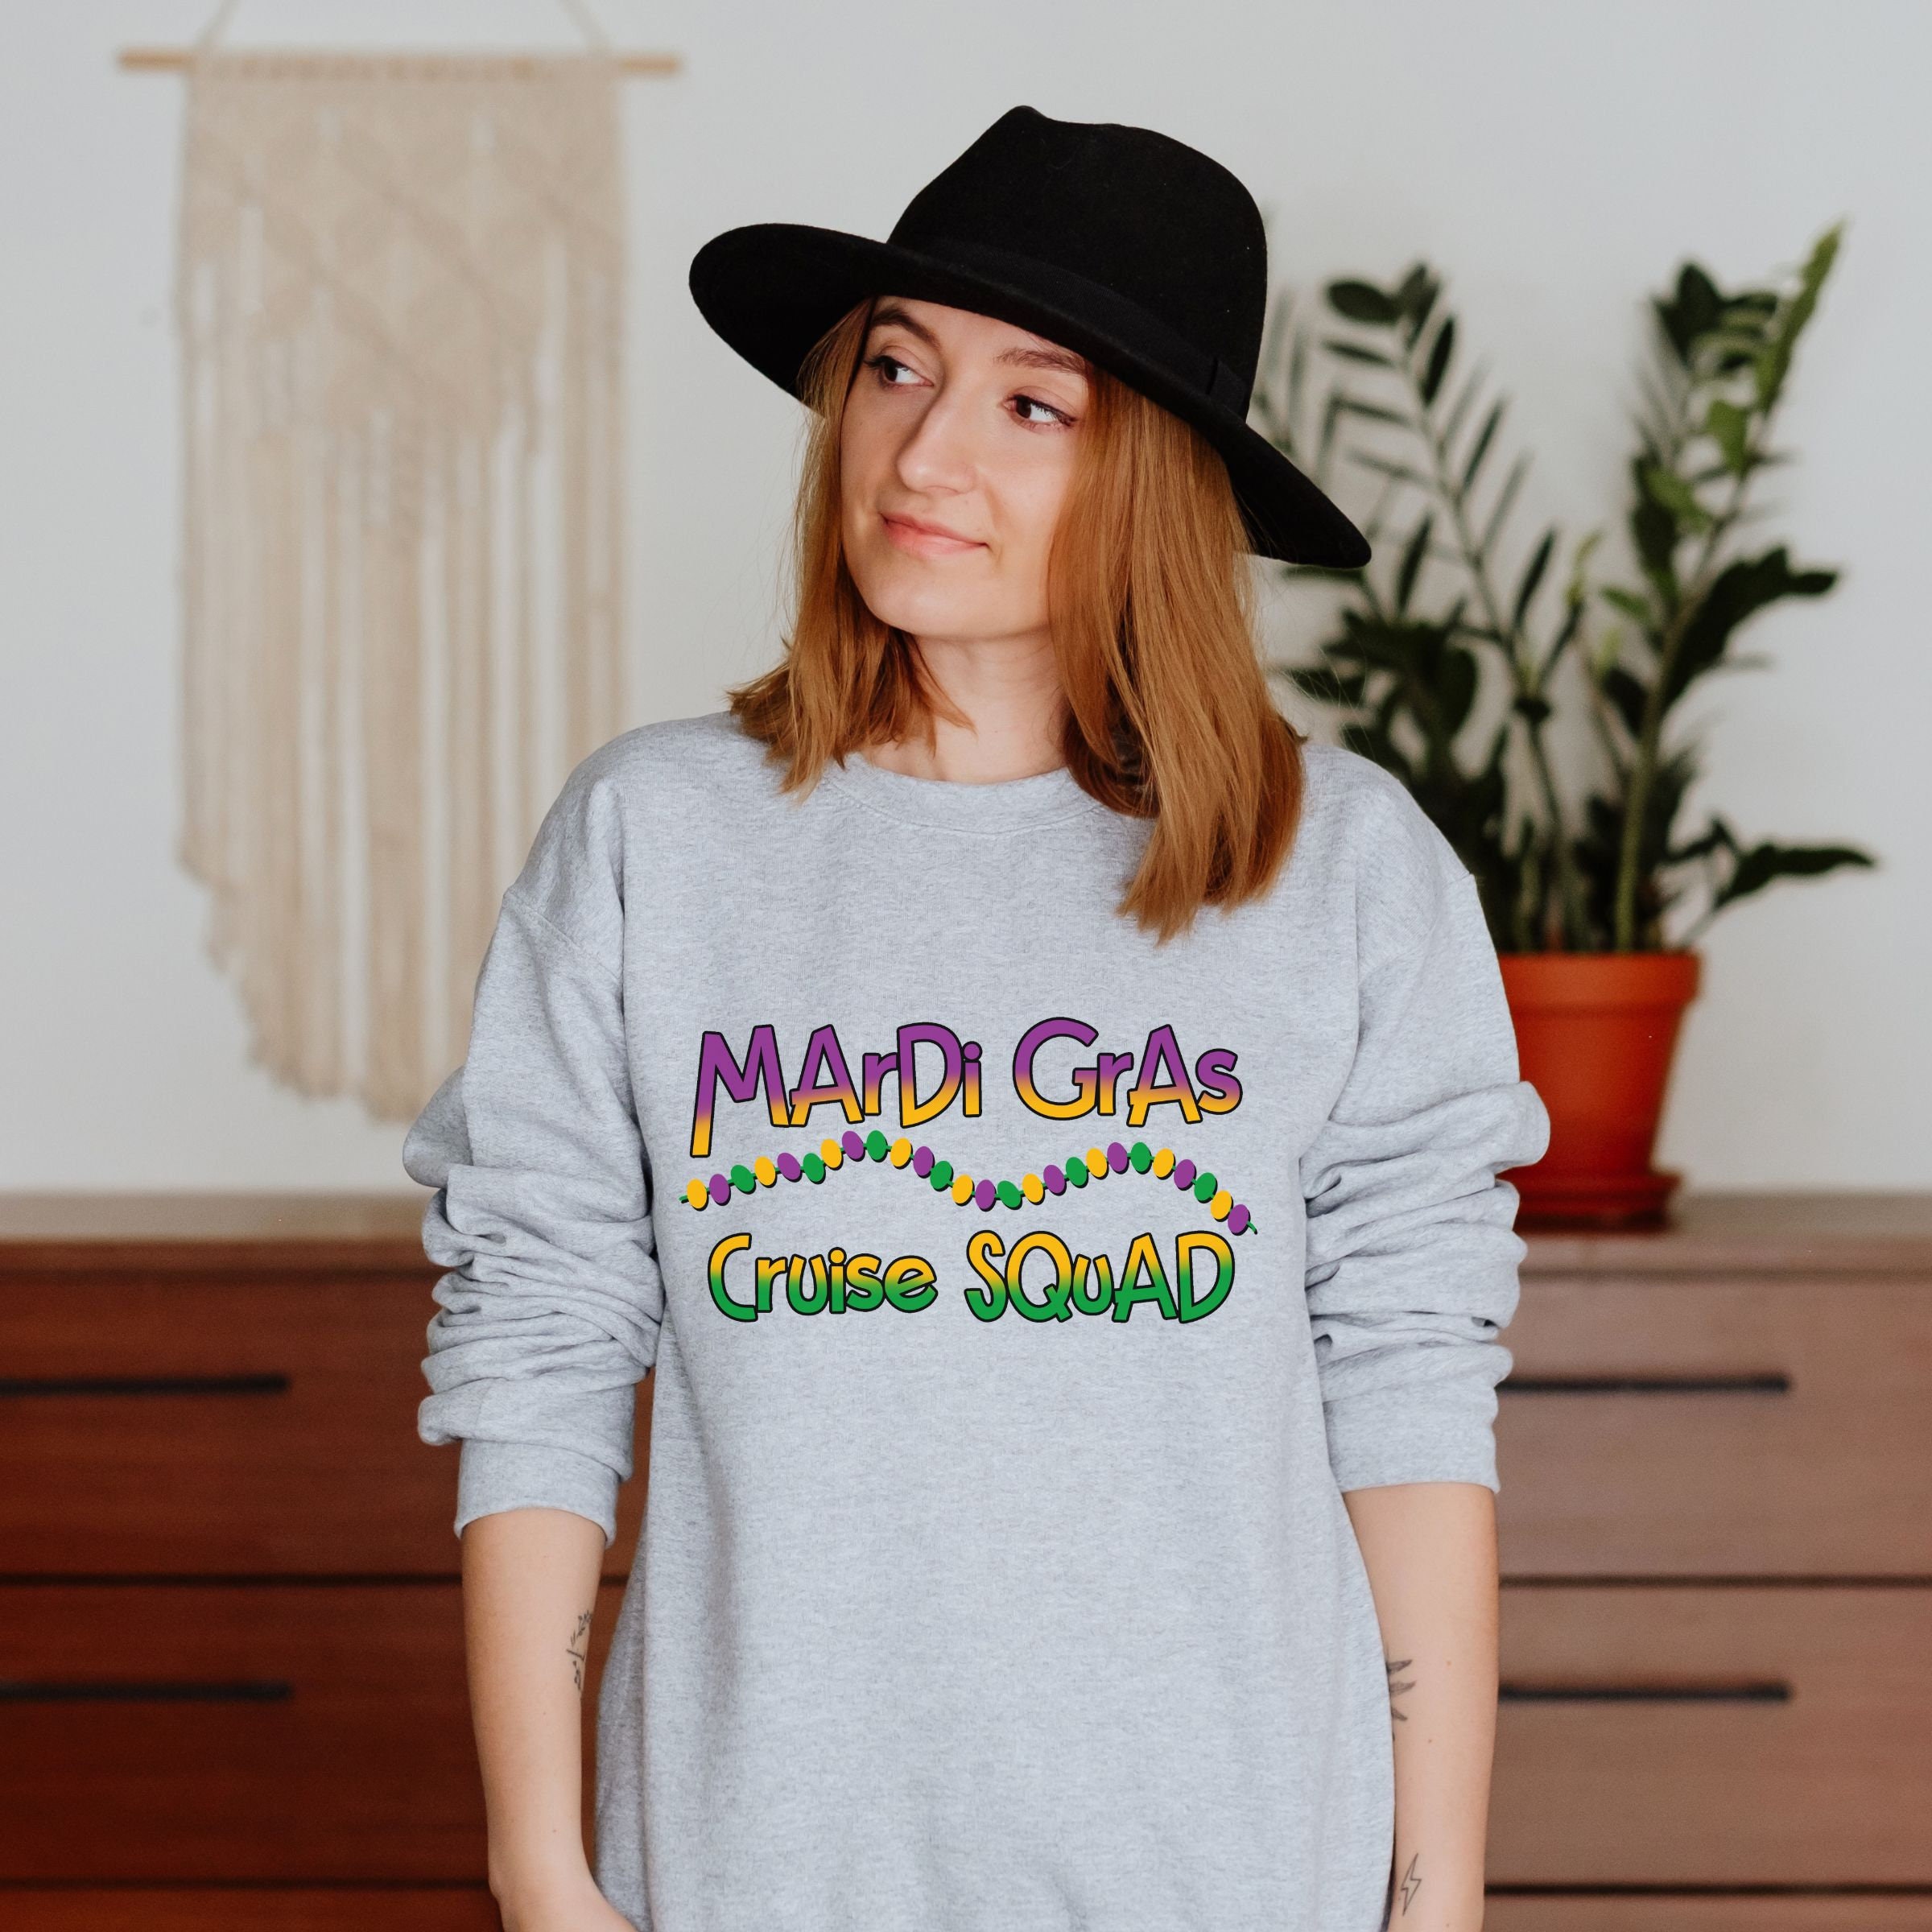 Jonomea Love Mardi Gras T-Shirt Black / Adult-3X Large